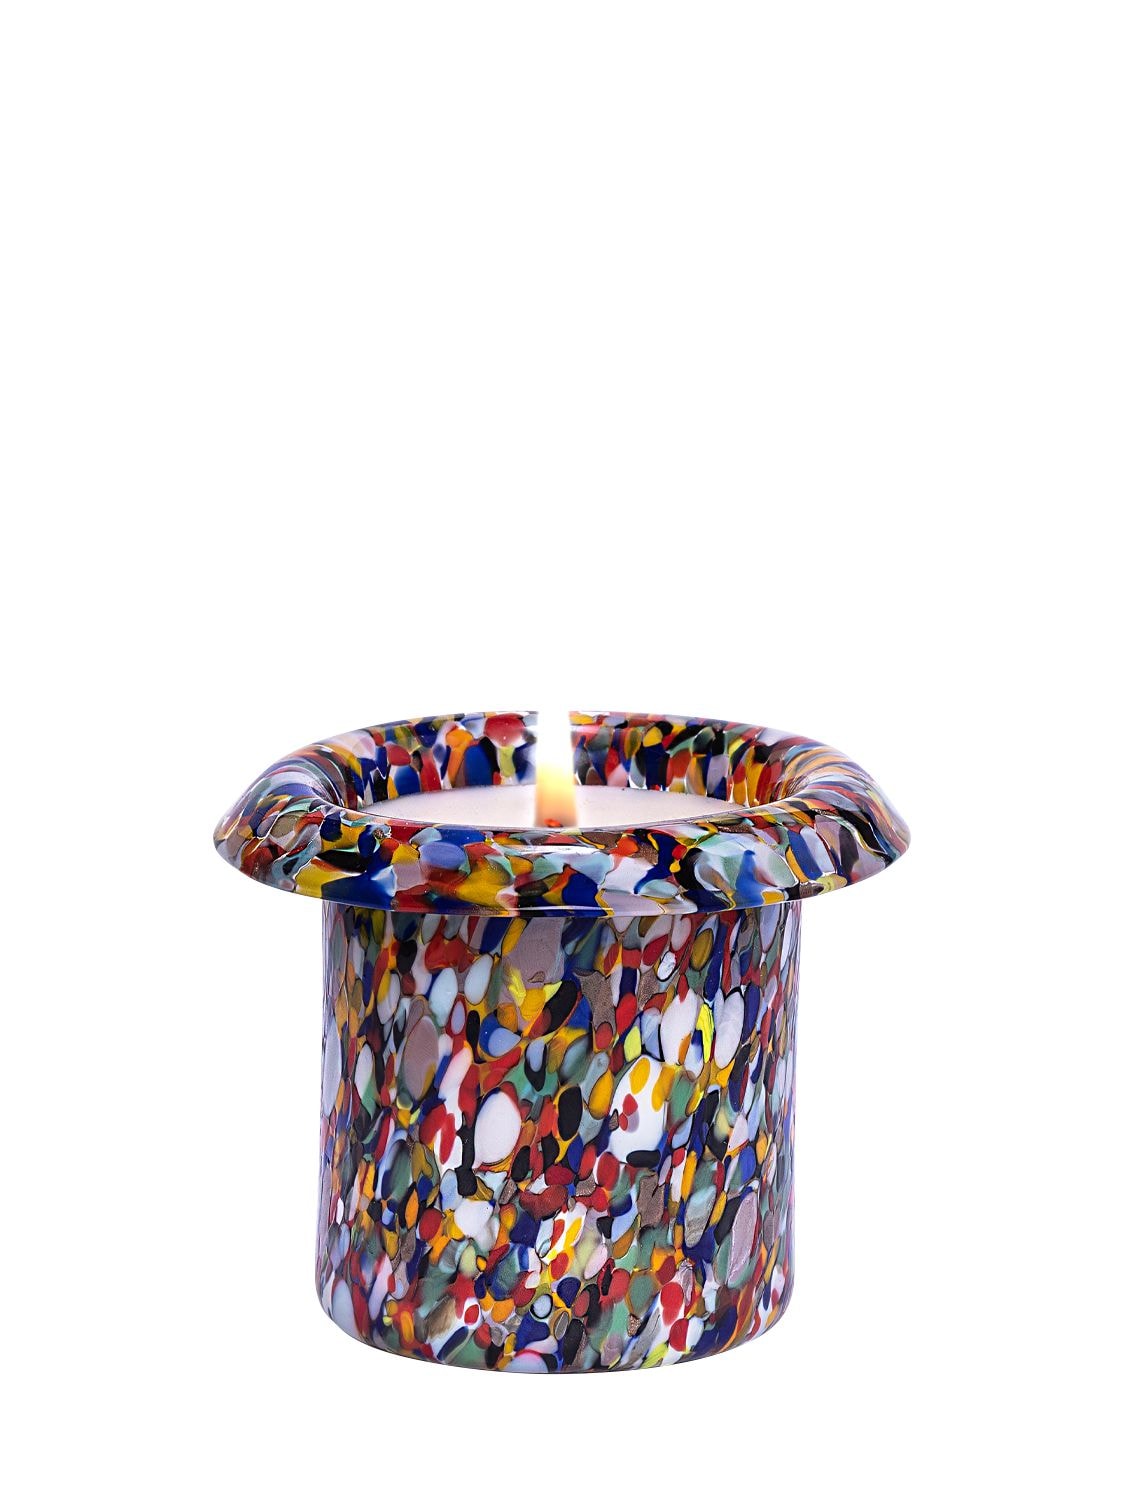 Aina Kari Mille 11.2 Oz. Murano Glass Candle In Multi